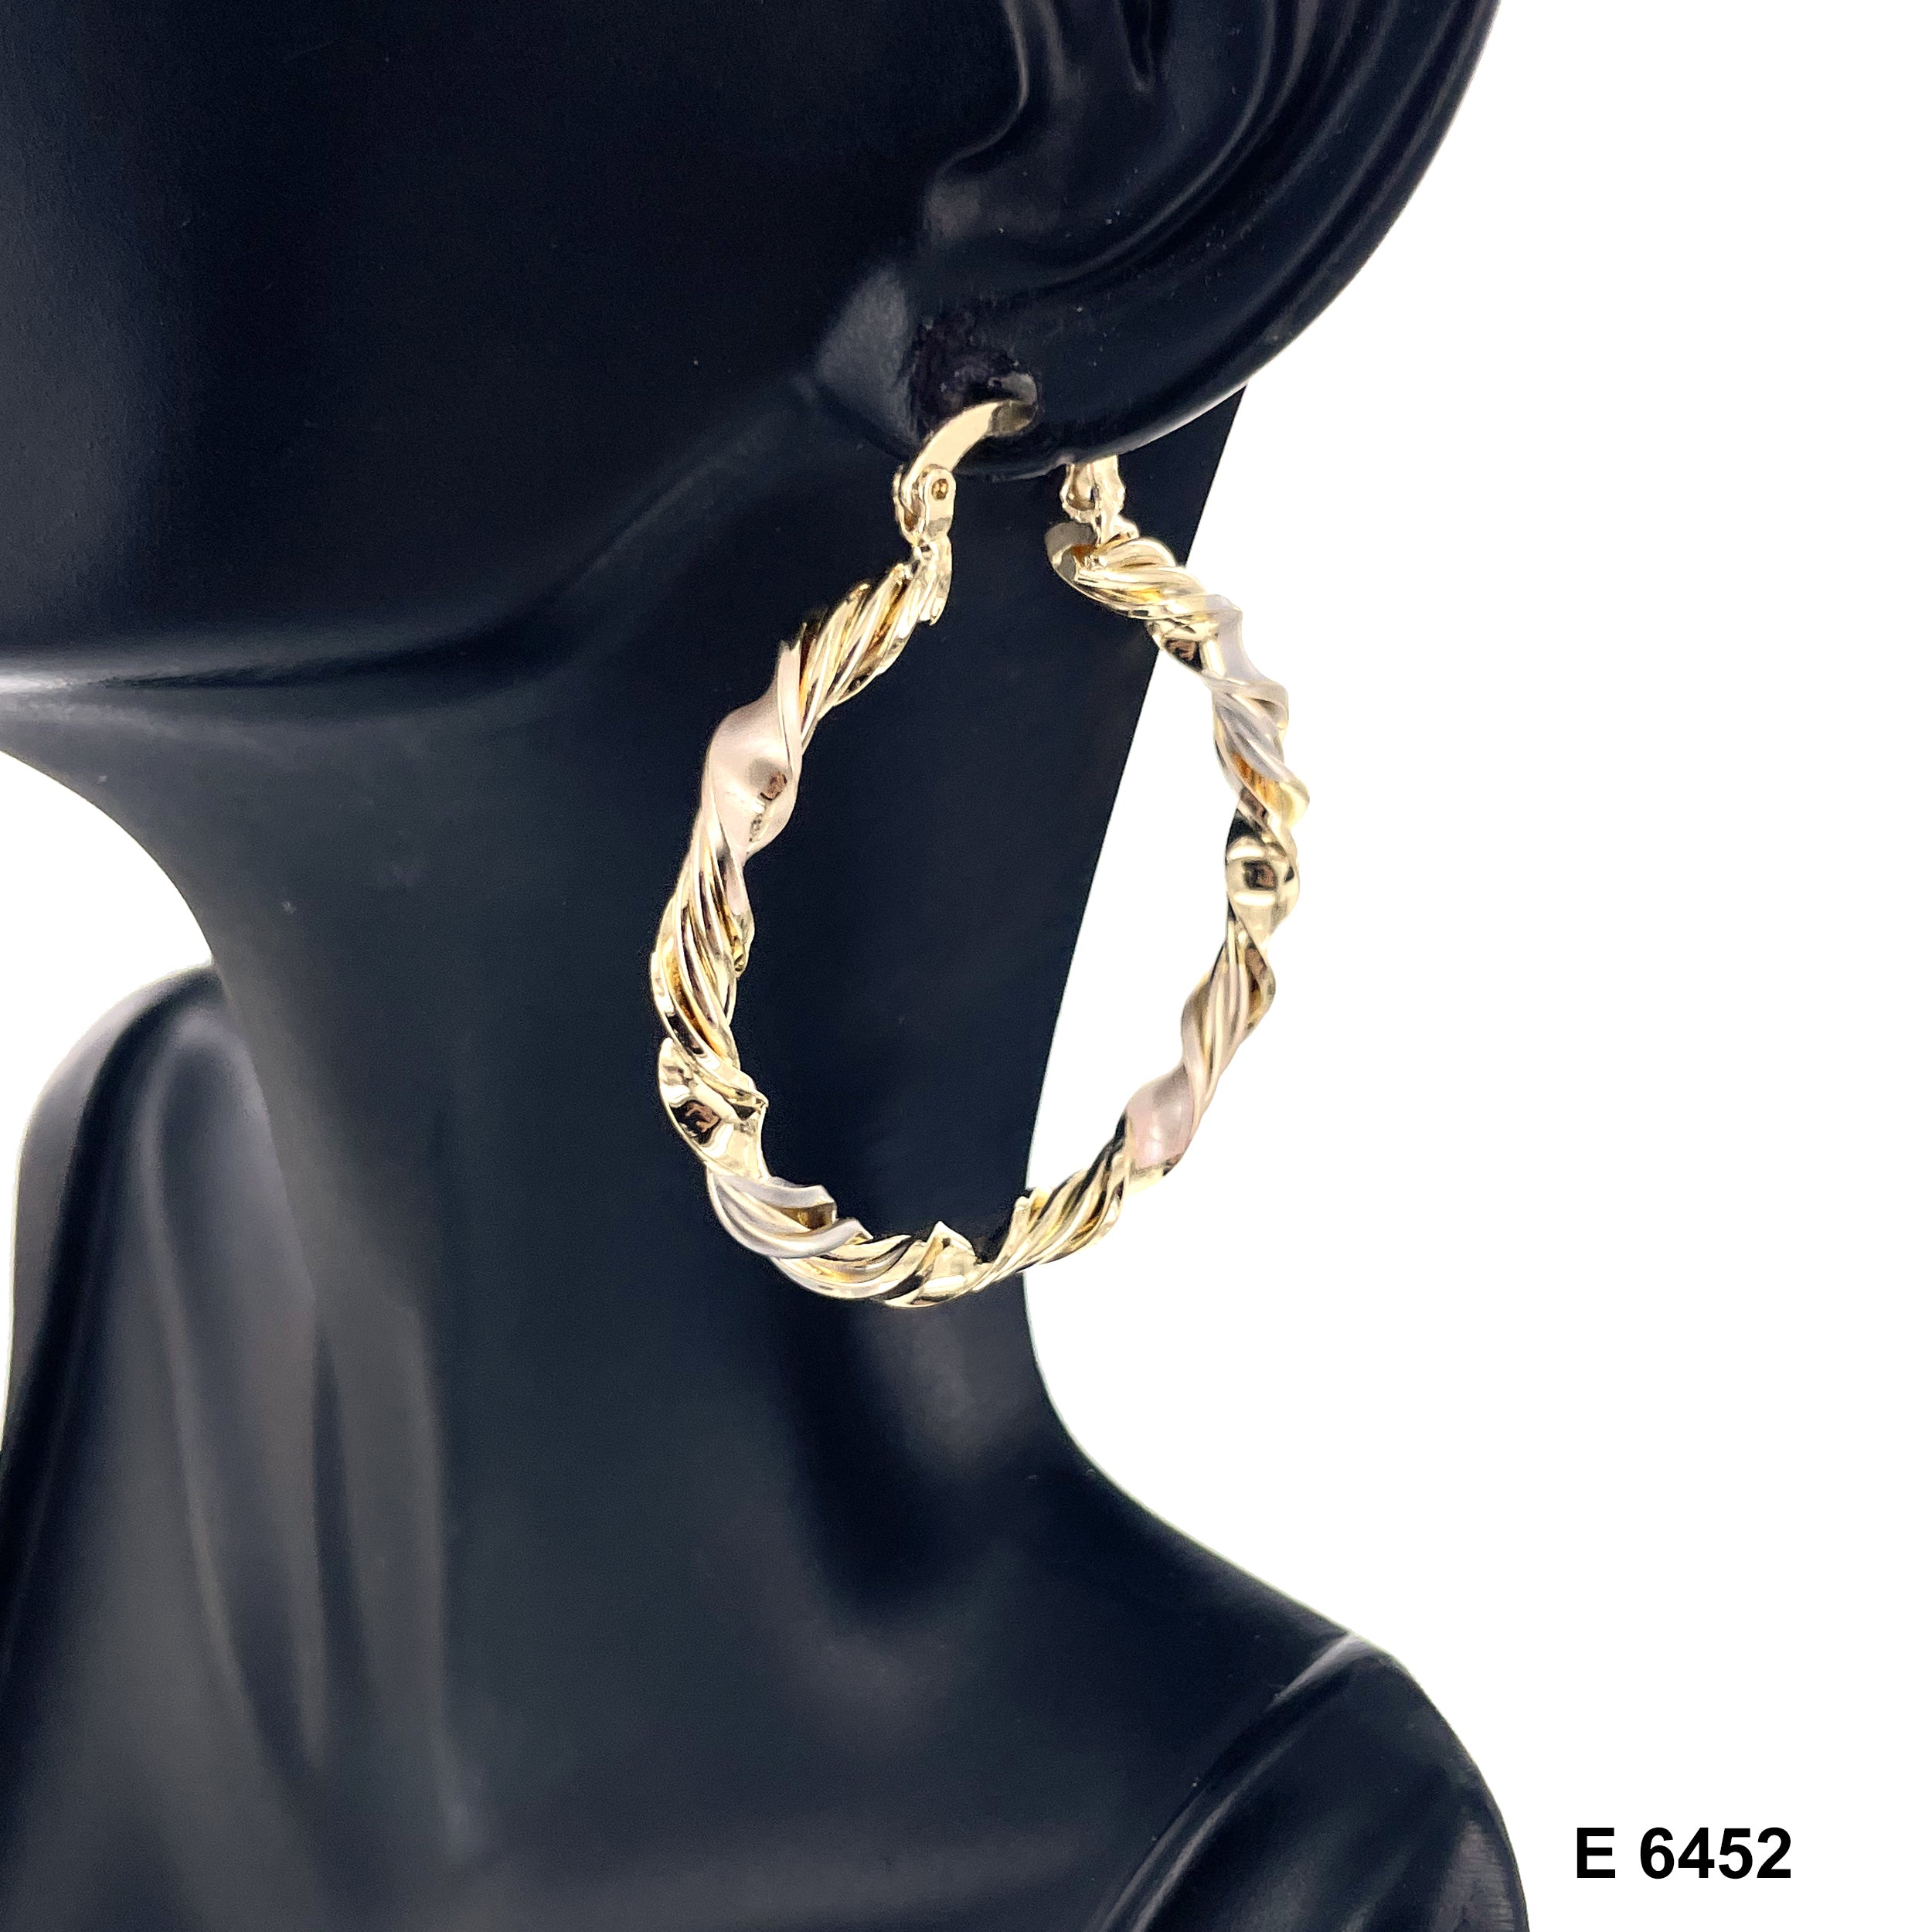 Engraved Hoop Earrings E 6452